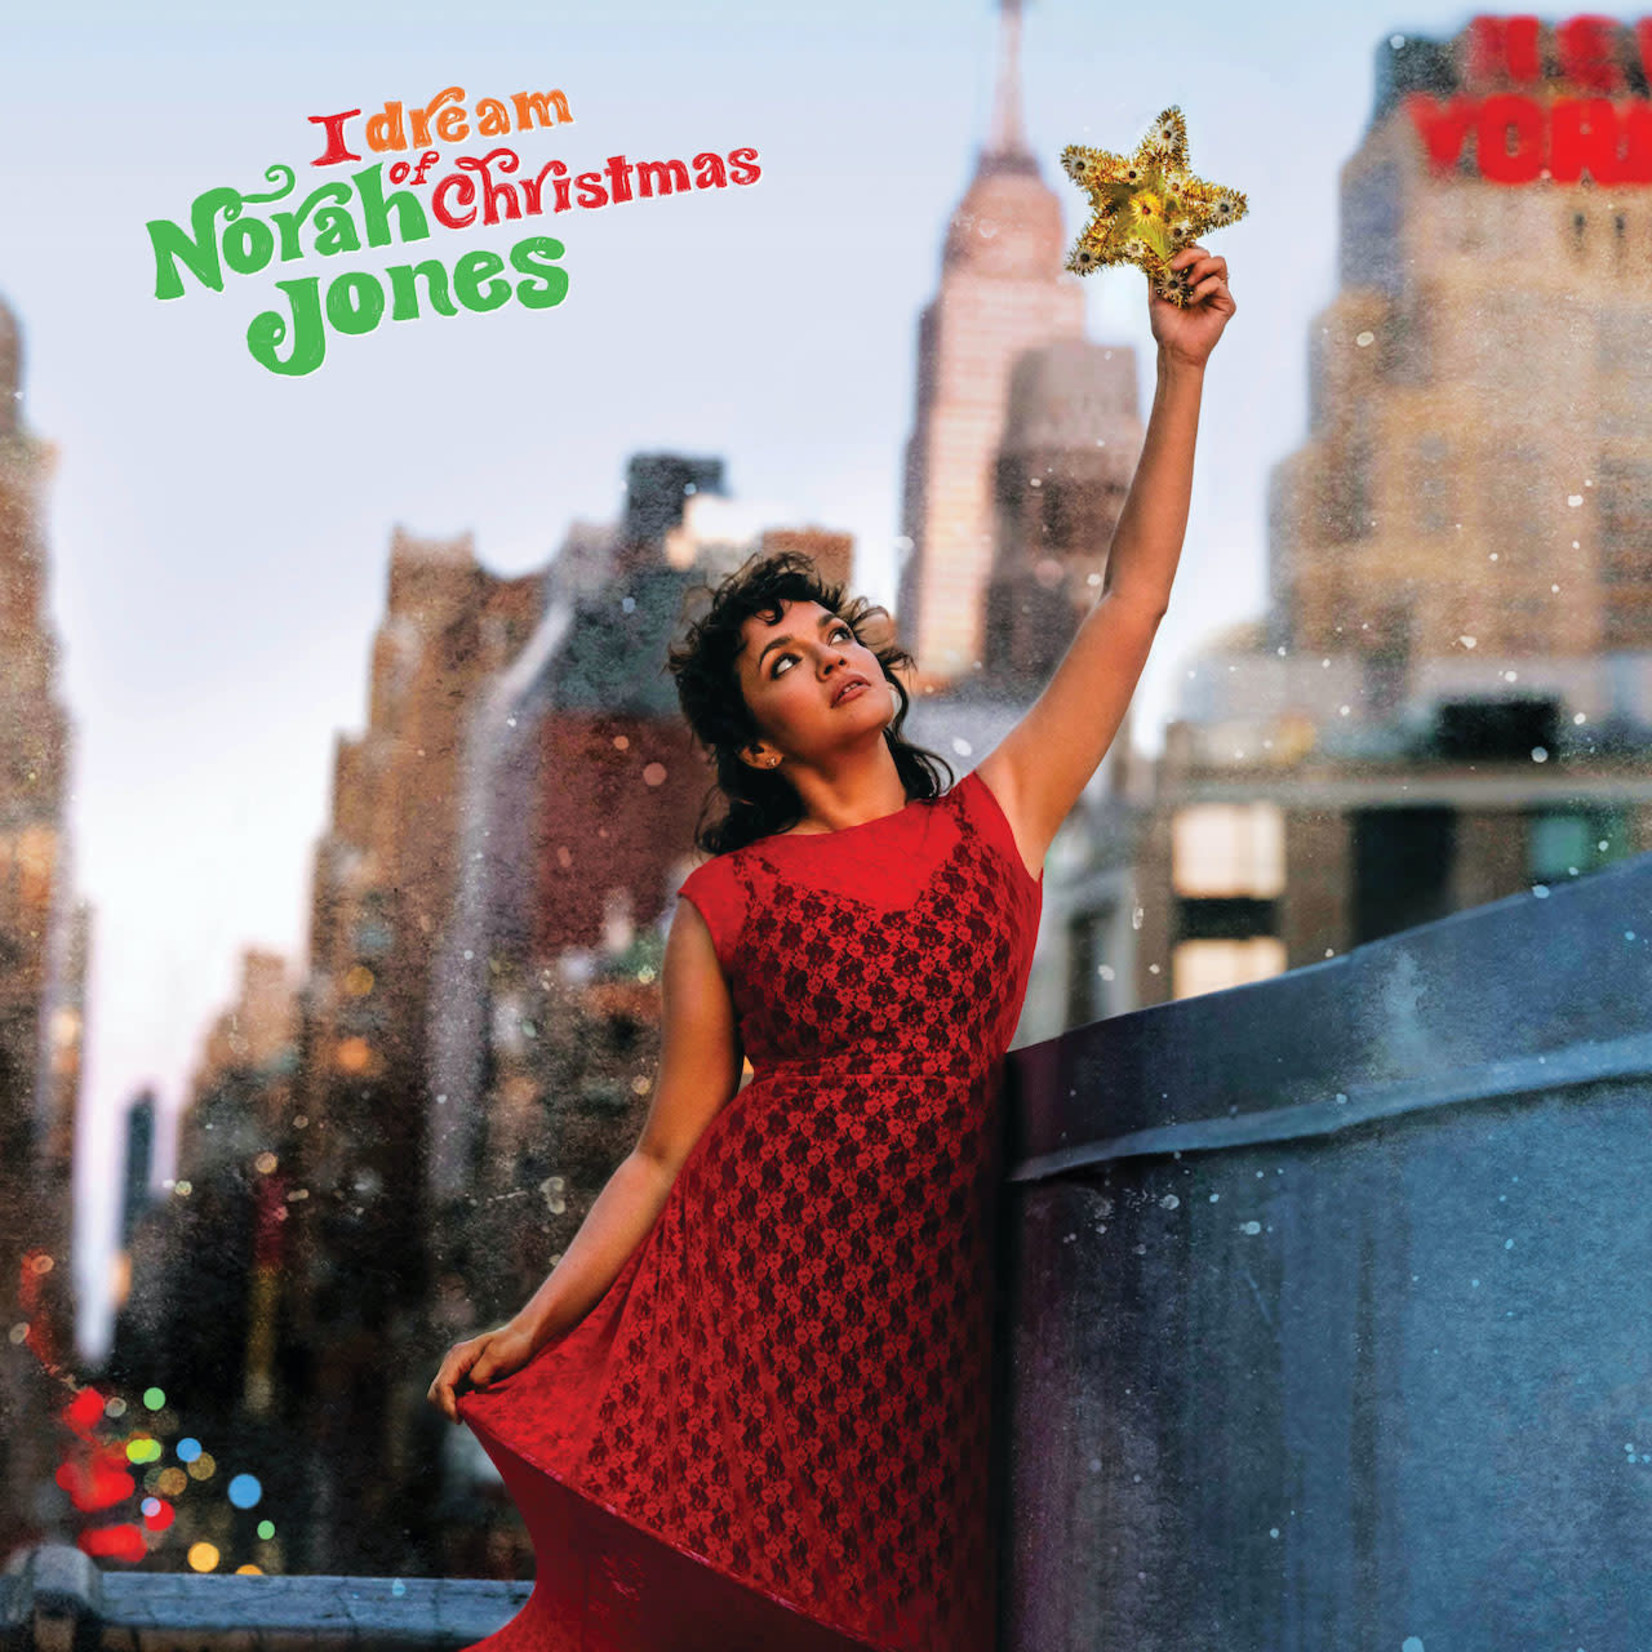 [New] Norah Jones - I Dream Of Christmas